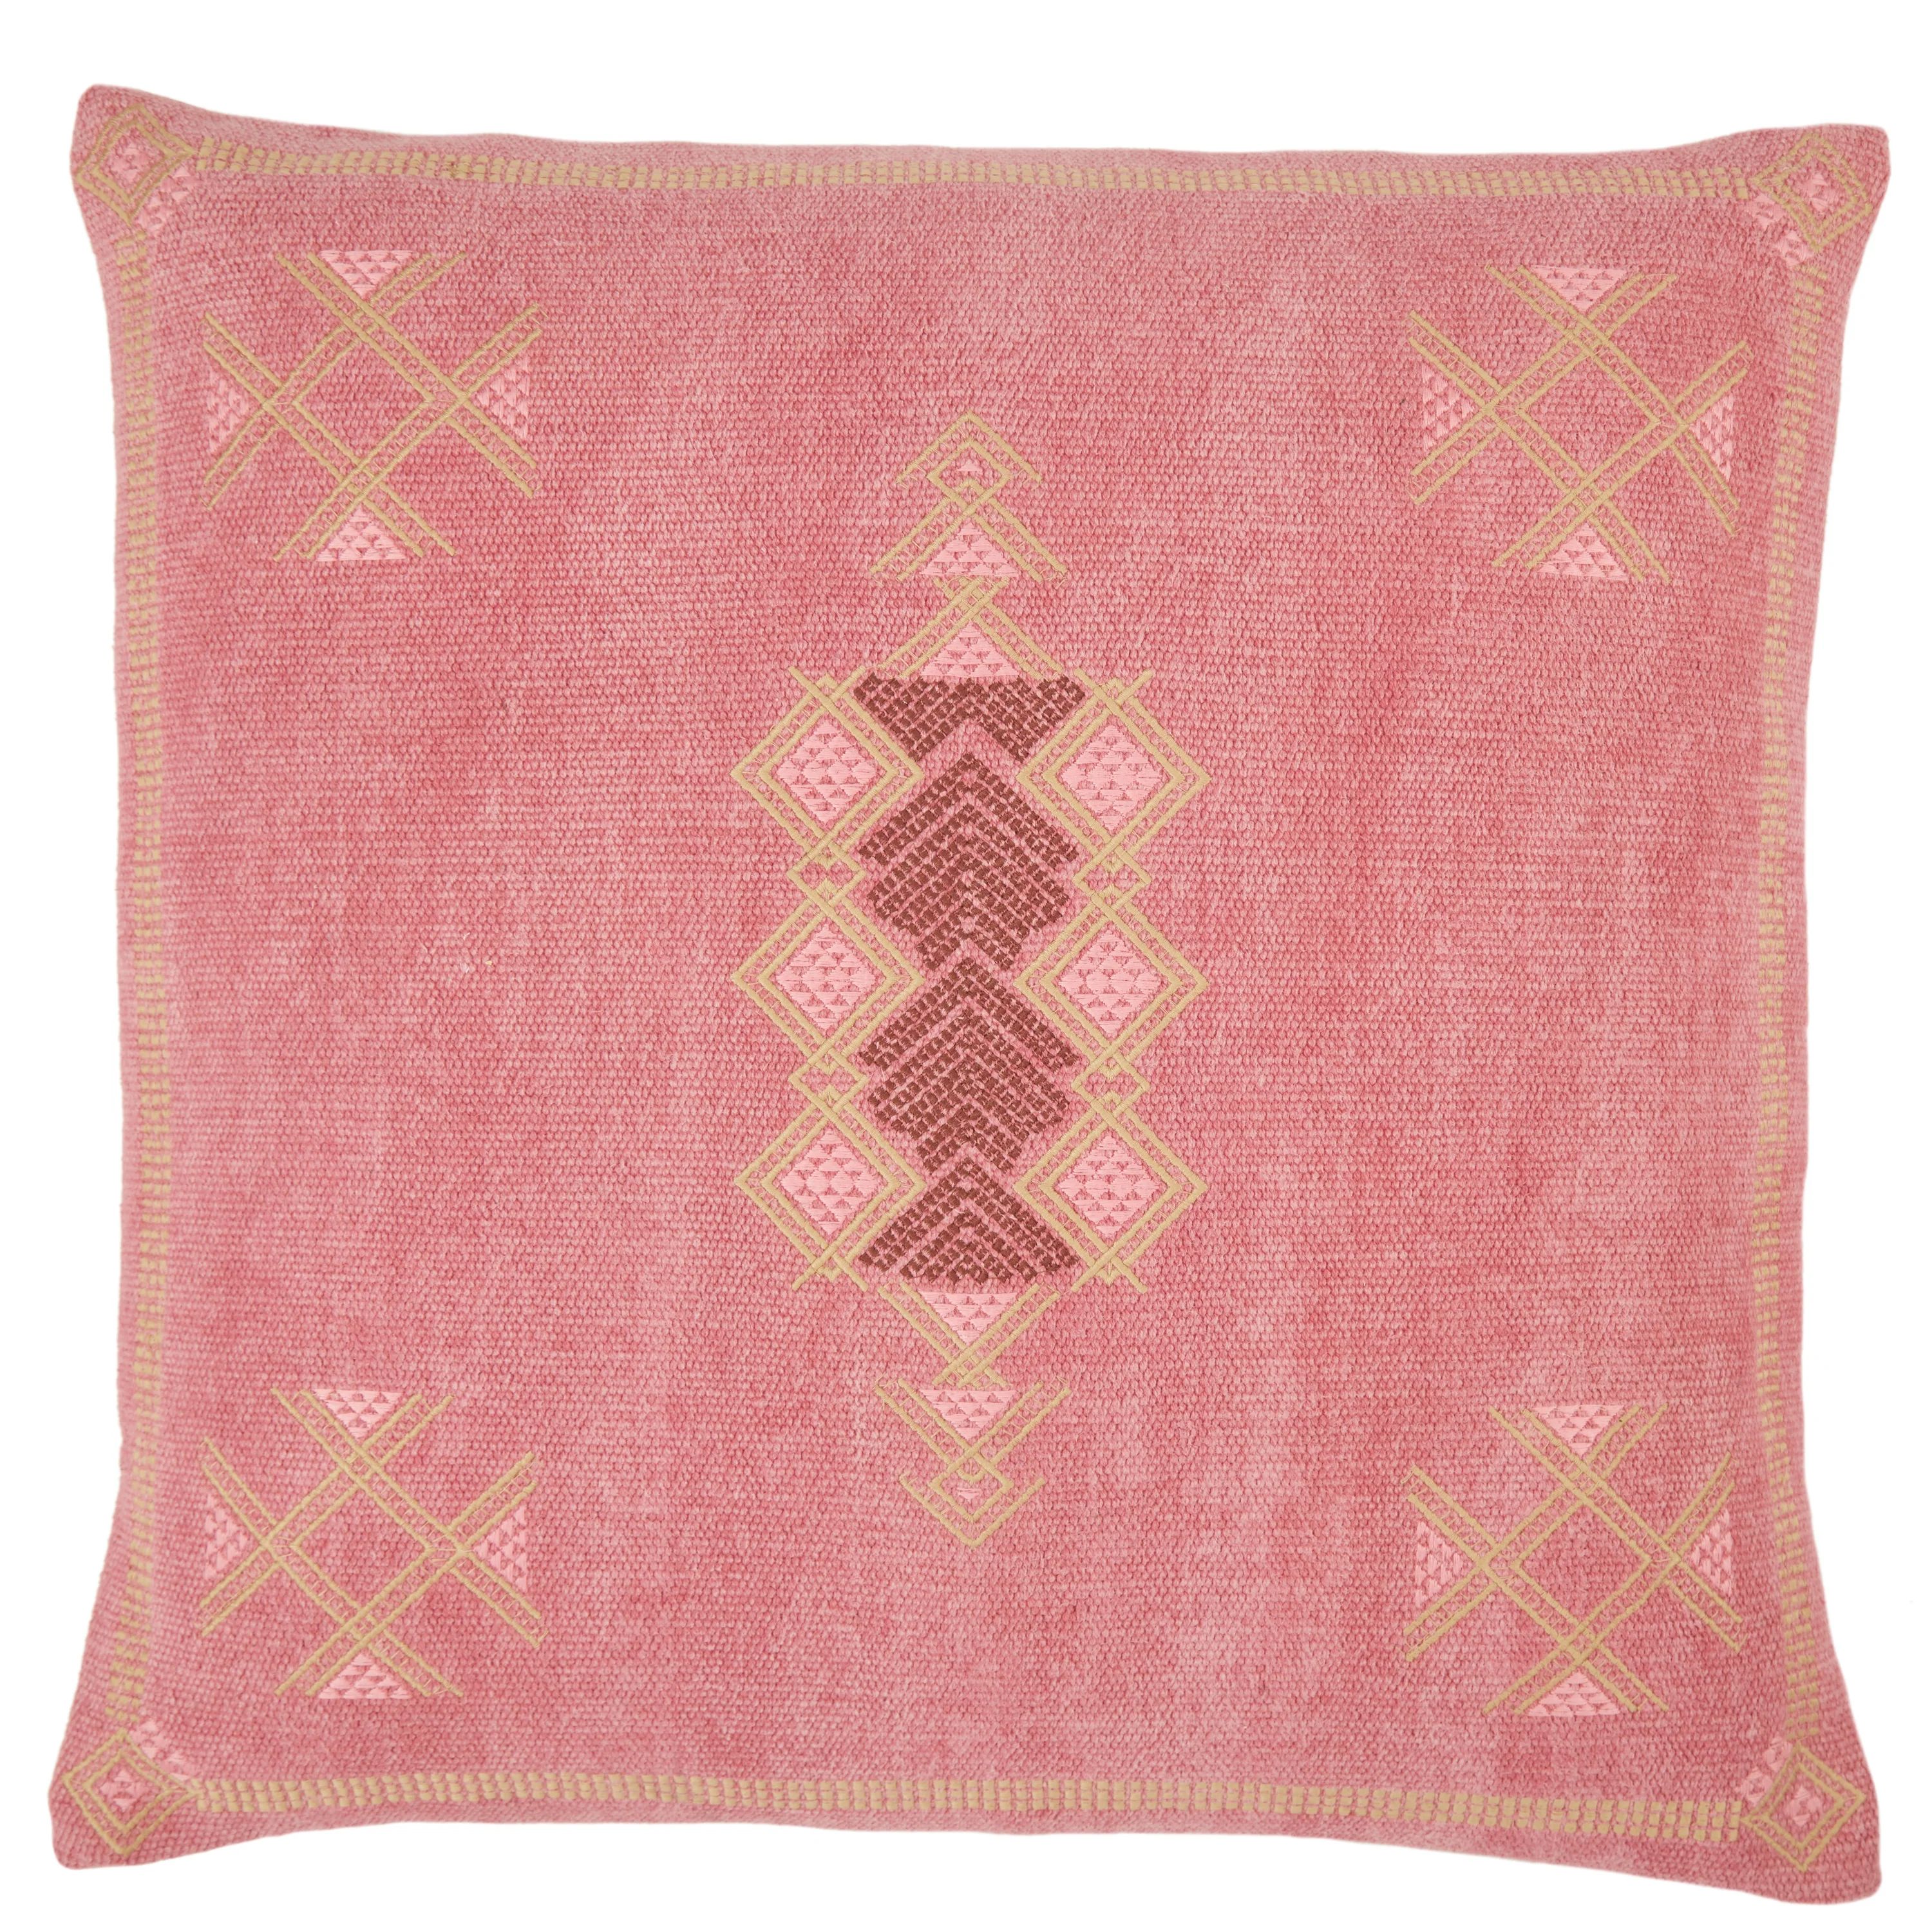 Shazi Tribal Pillow in Pink & Tan | Burke Decor